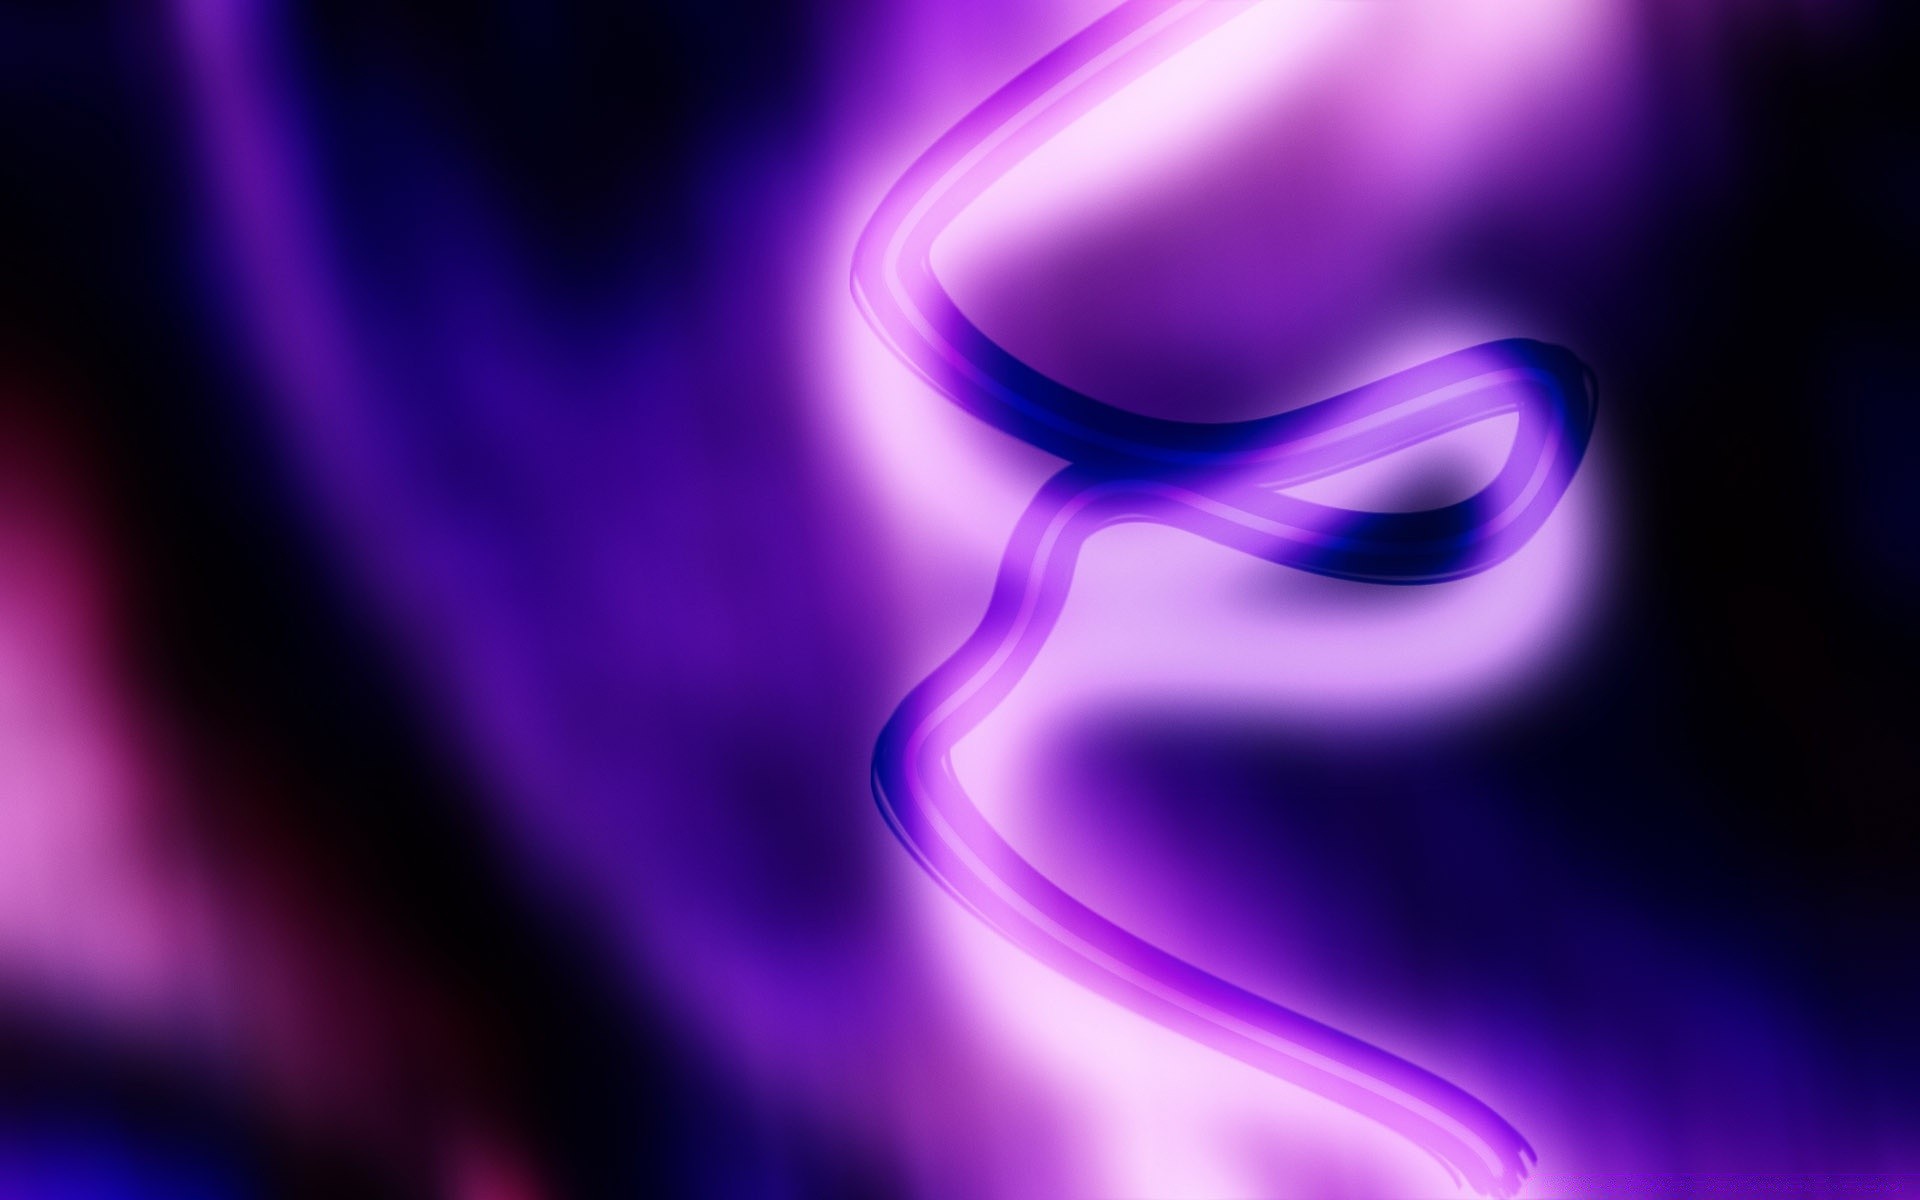 bright colors abstract blur art design color illustration light futuristic graphic bright wallpaper artistic curve desktop shape flame texture motion fantasy wave